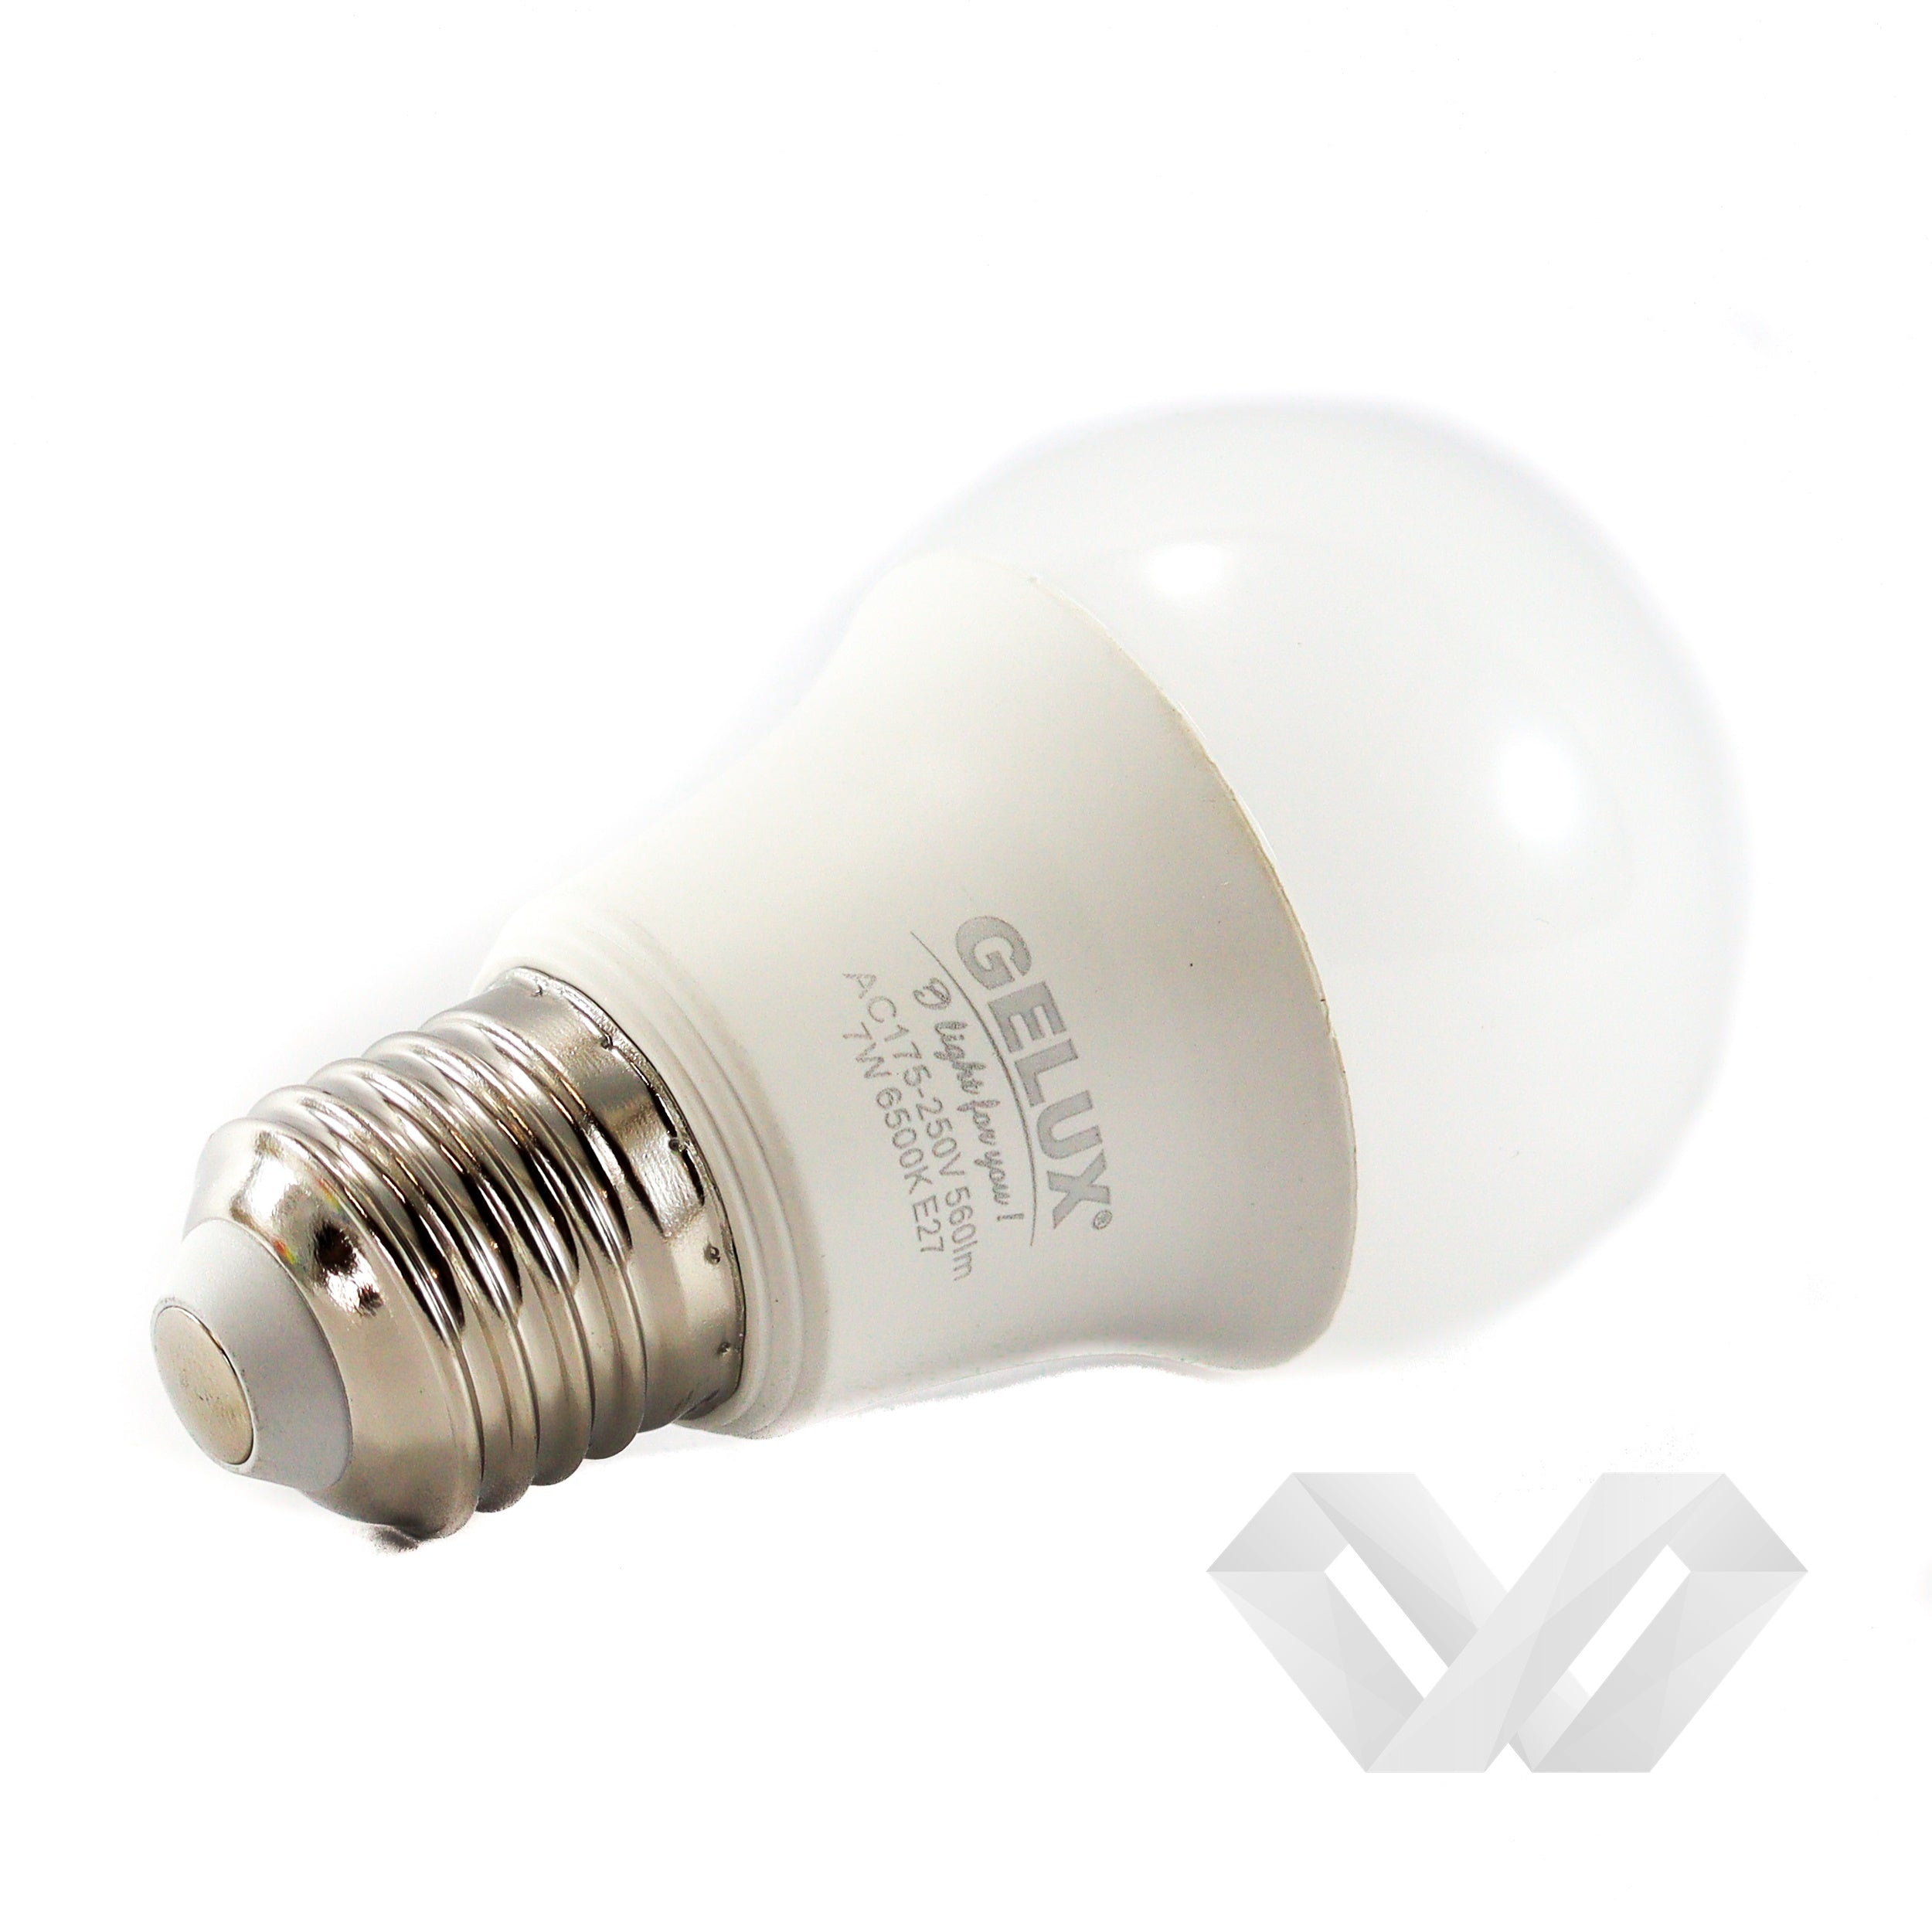 Bec LED Standard 19W ECOLED, echivalent 160W lumină rece, Gelux